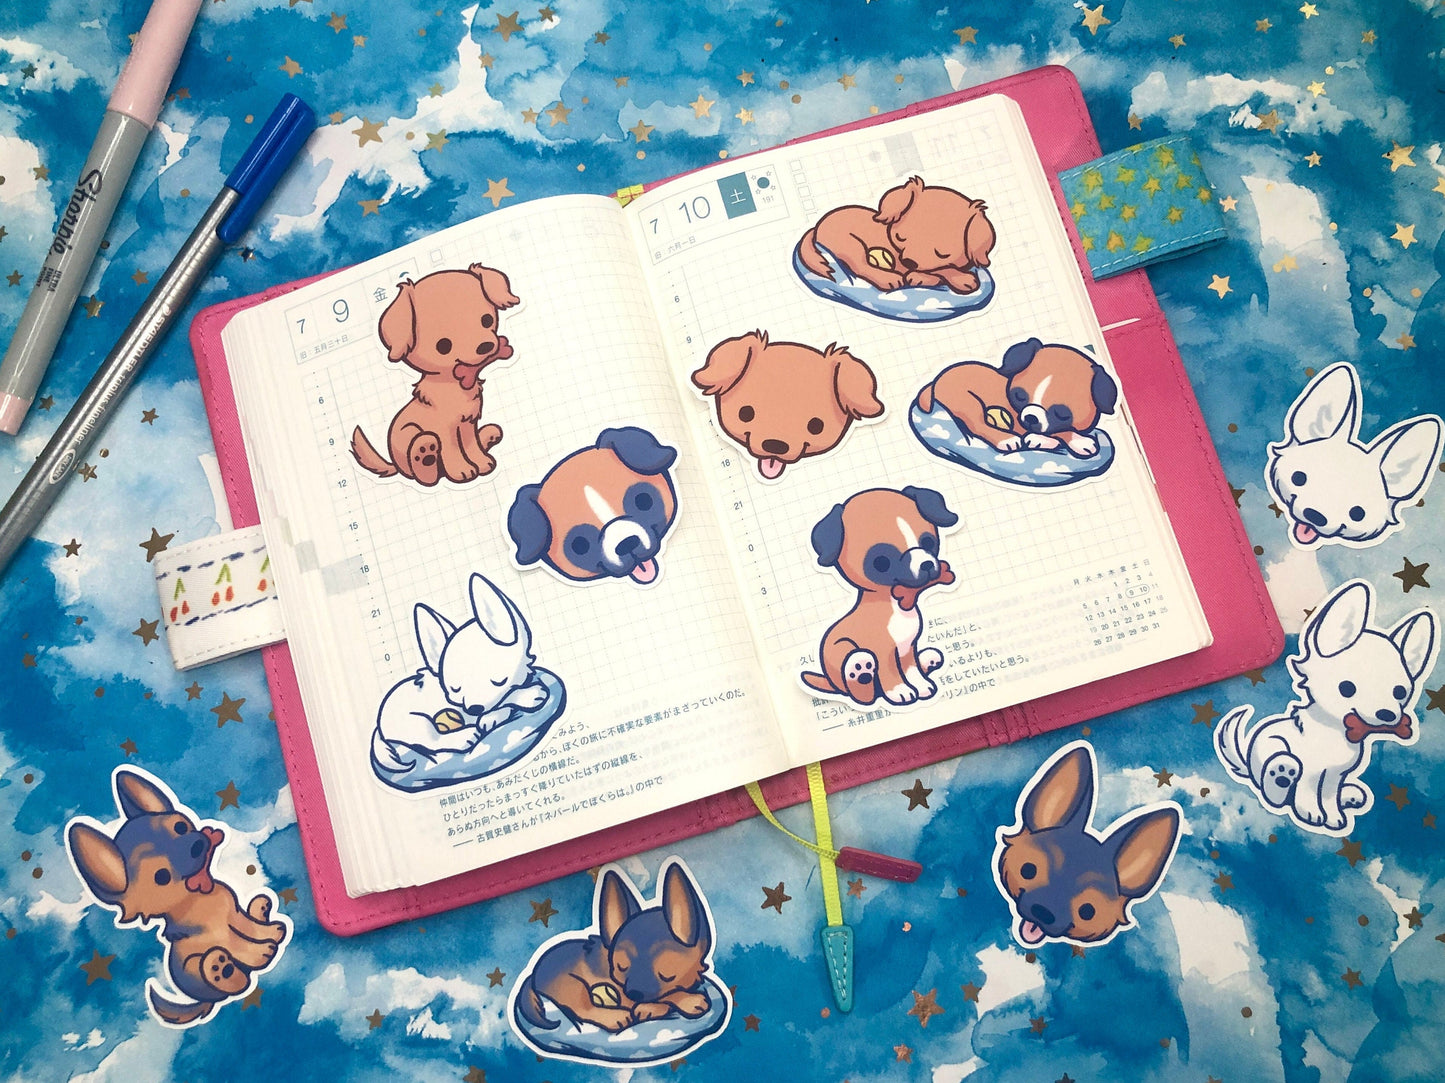 Choose your Dog! Sticker Pack Custom (24 different breeds, husky boxer shepherd corgi shiba inu pug lab yorkie beagle pomeranian dalmatian)